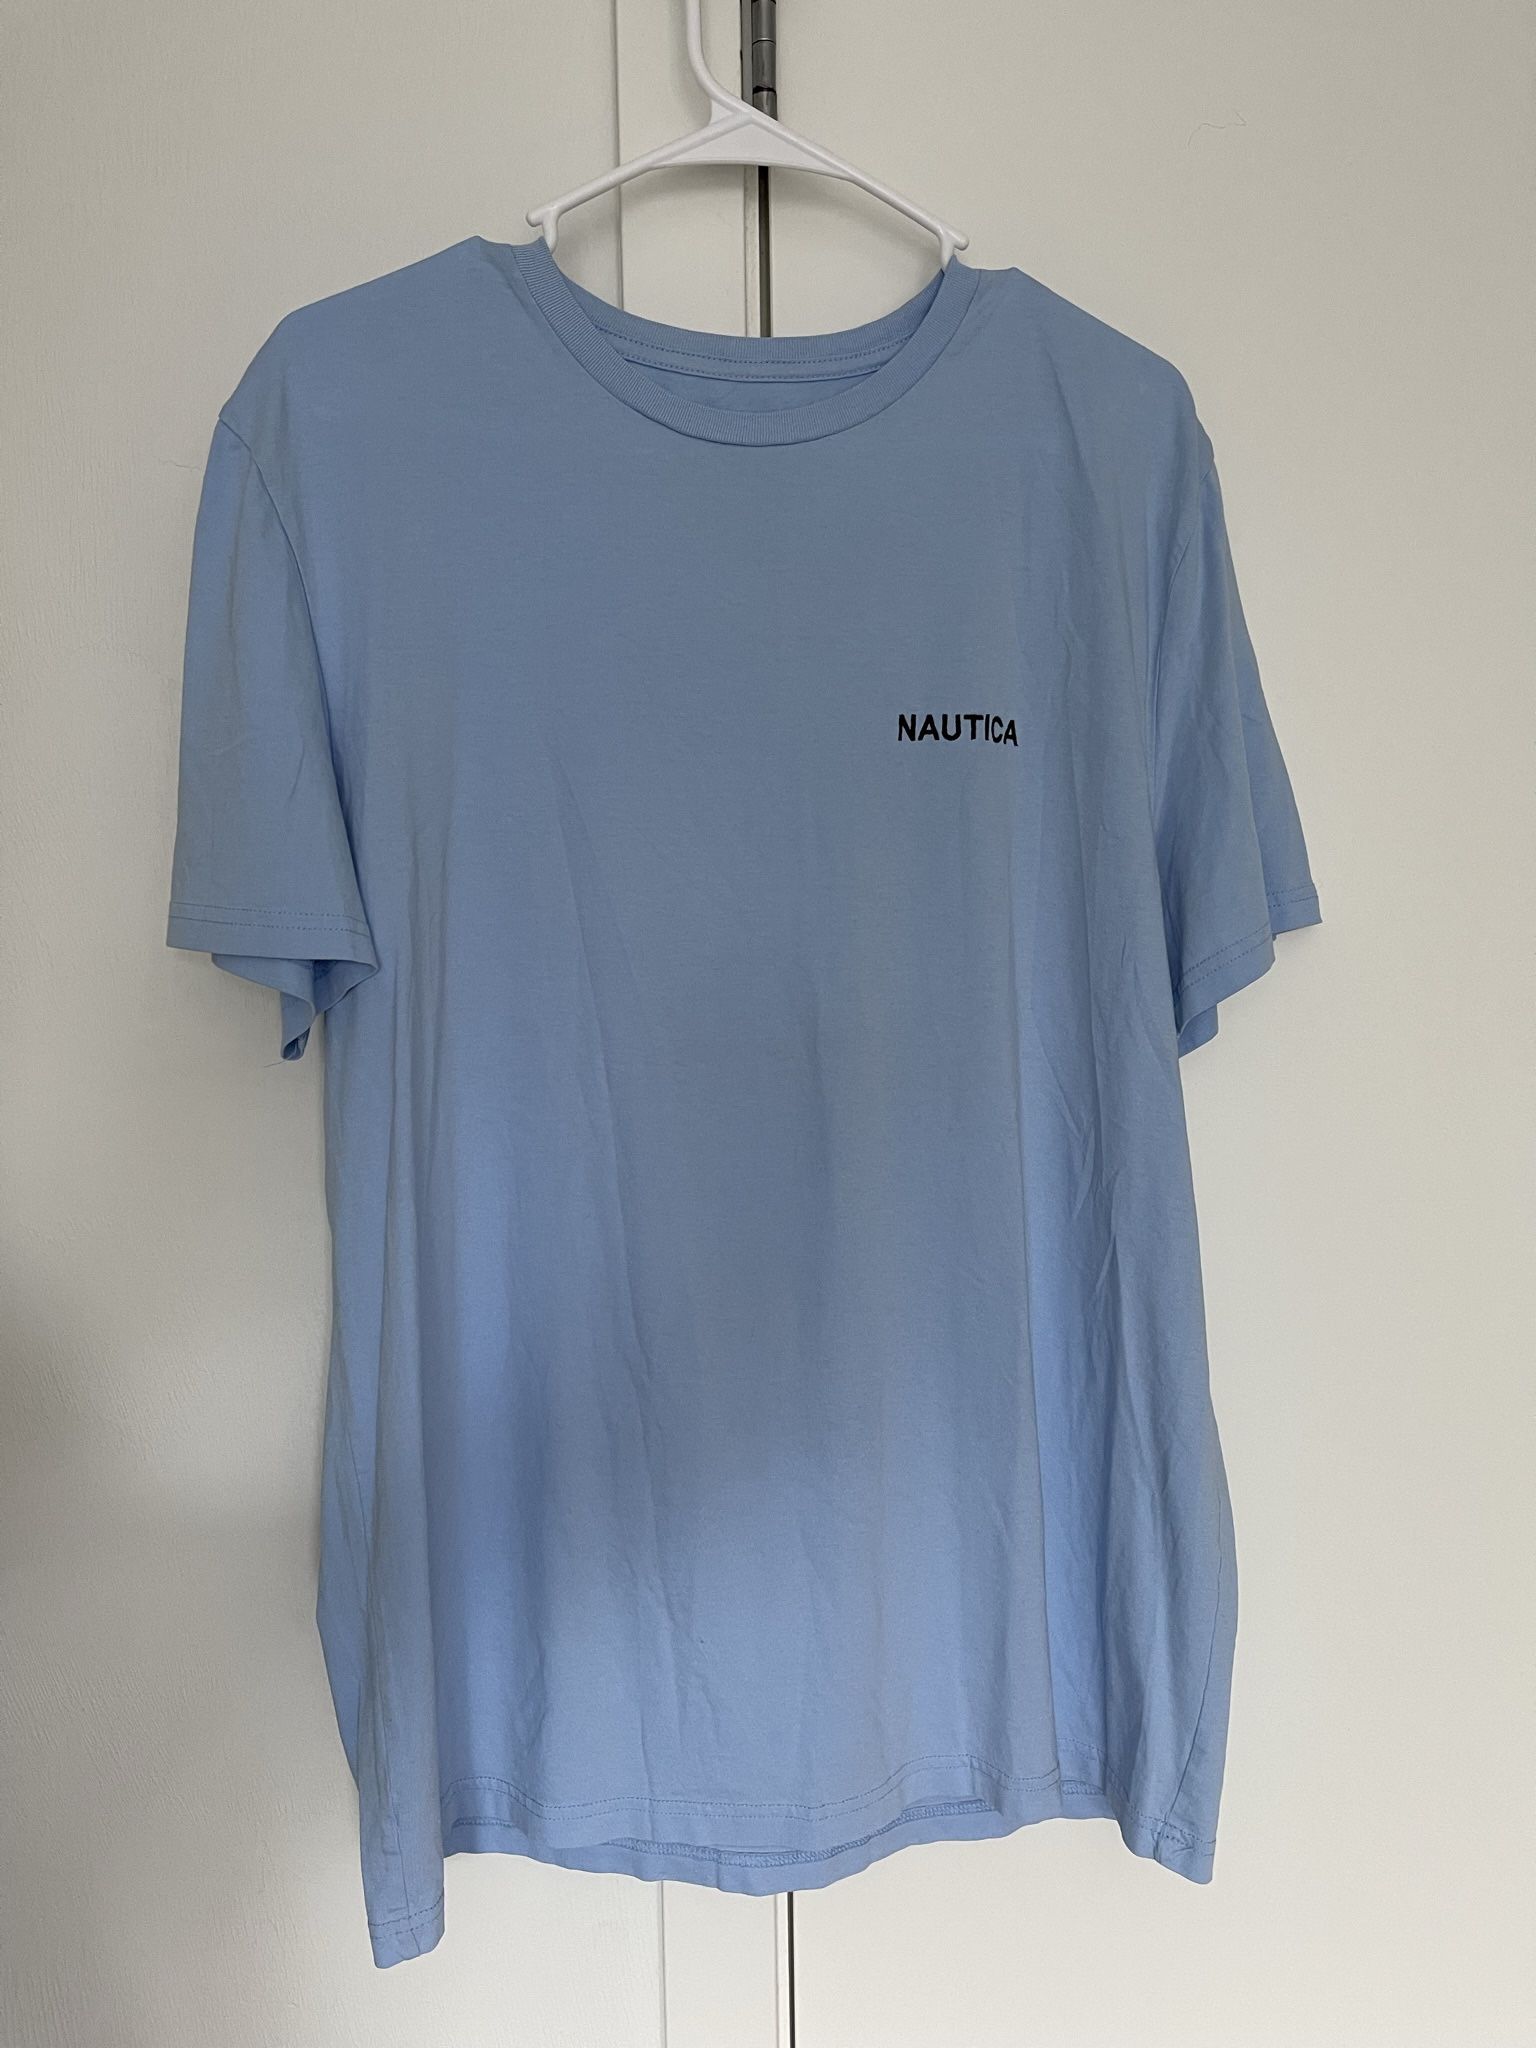 Two Nautica T-shirts Size Xl